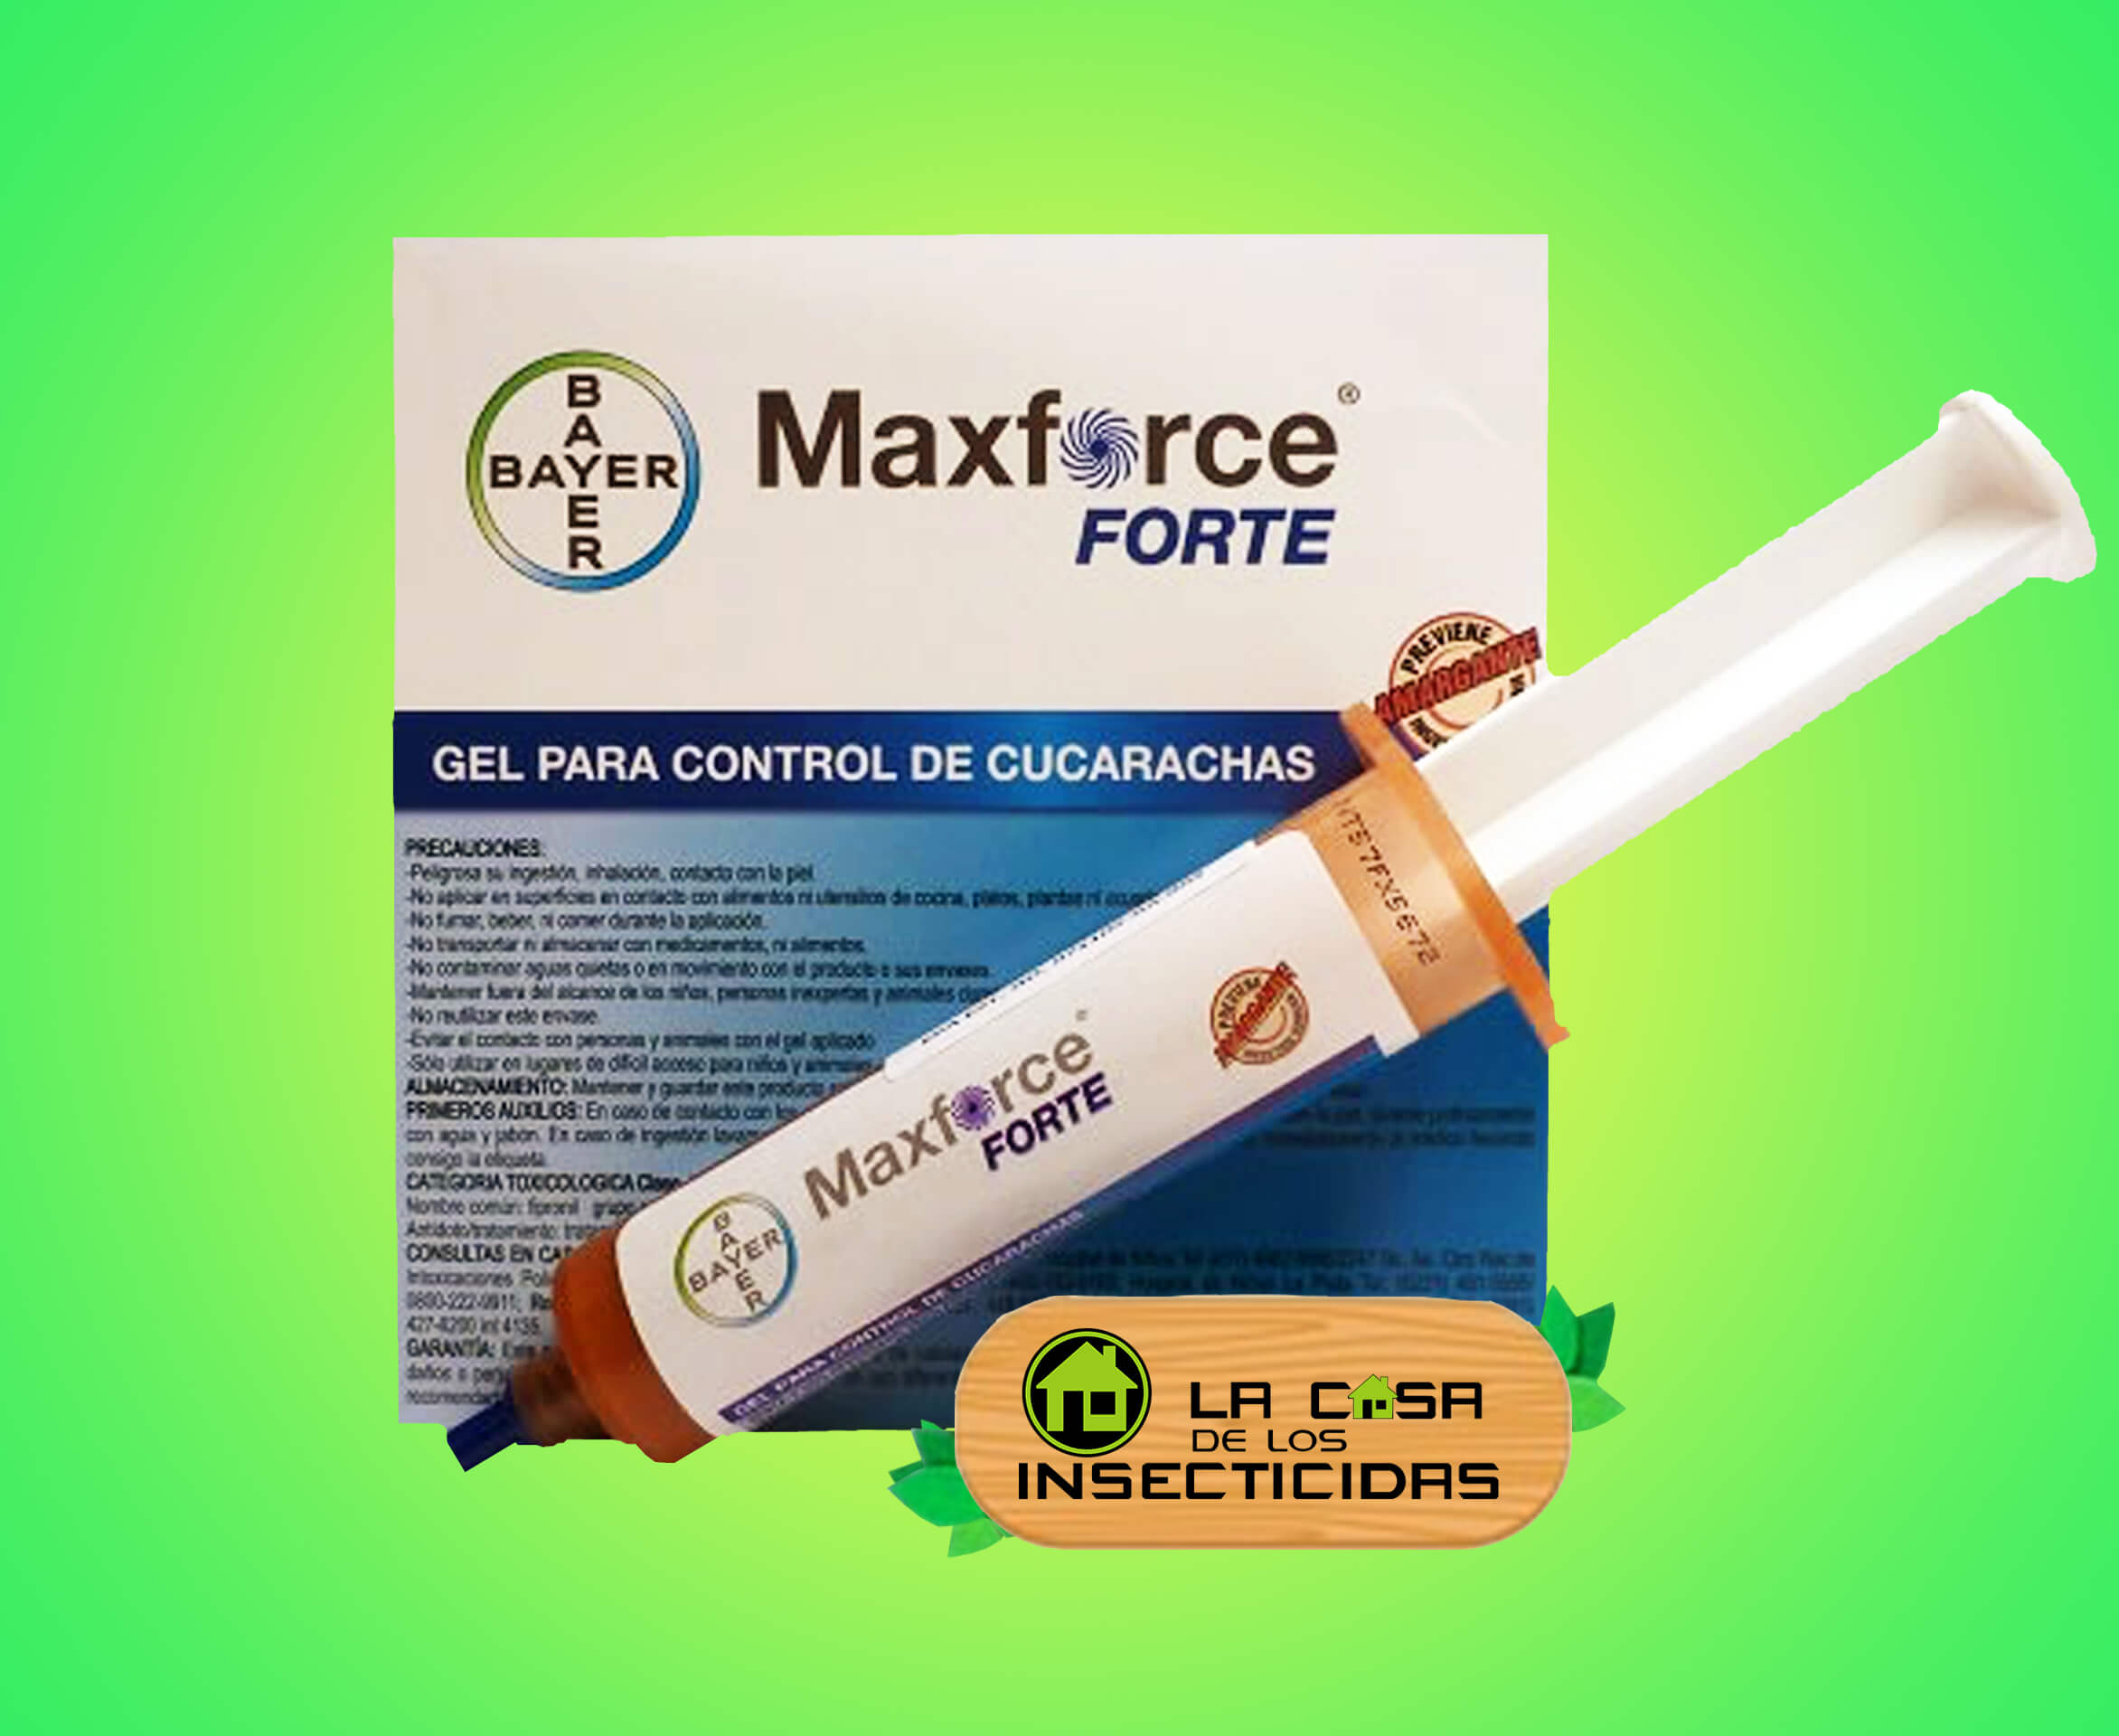 Maxforce Forte gel cucarachicida by Bayer. Hecho en USA.